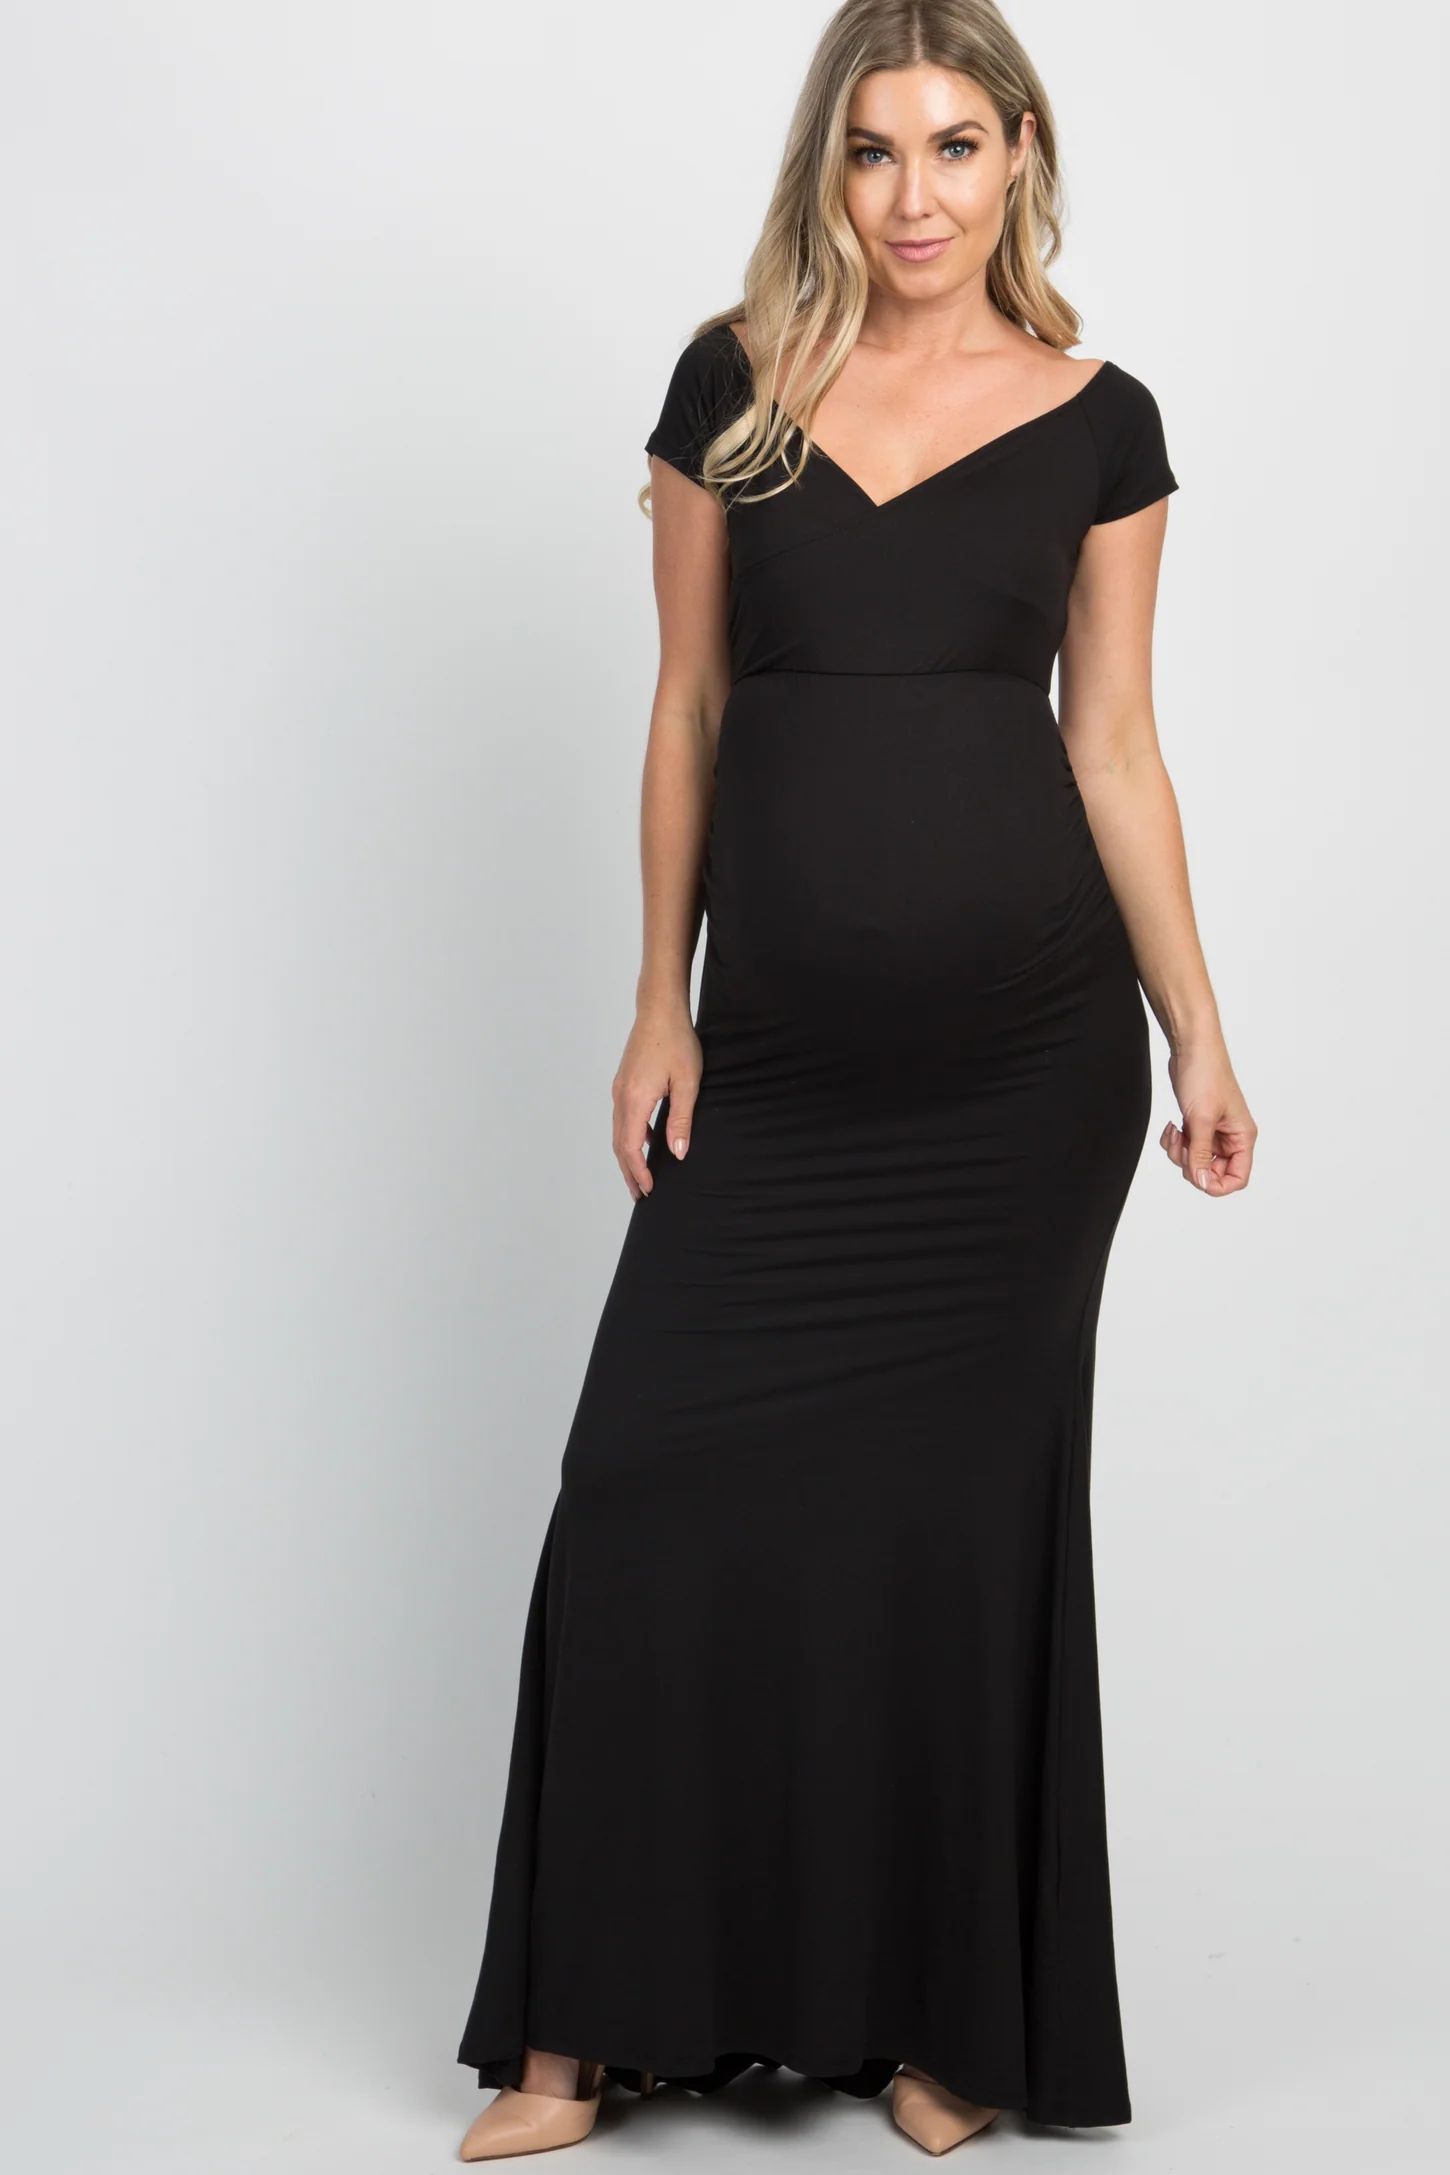 PinkBlush Black Off Shoulder Wrap Maternity Photoshoot Gown/Dress | PinkBlush Maternity